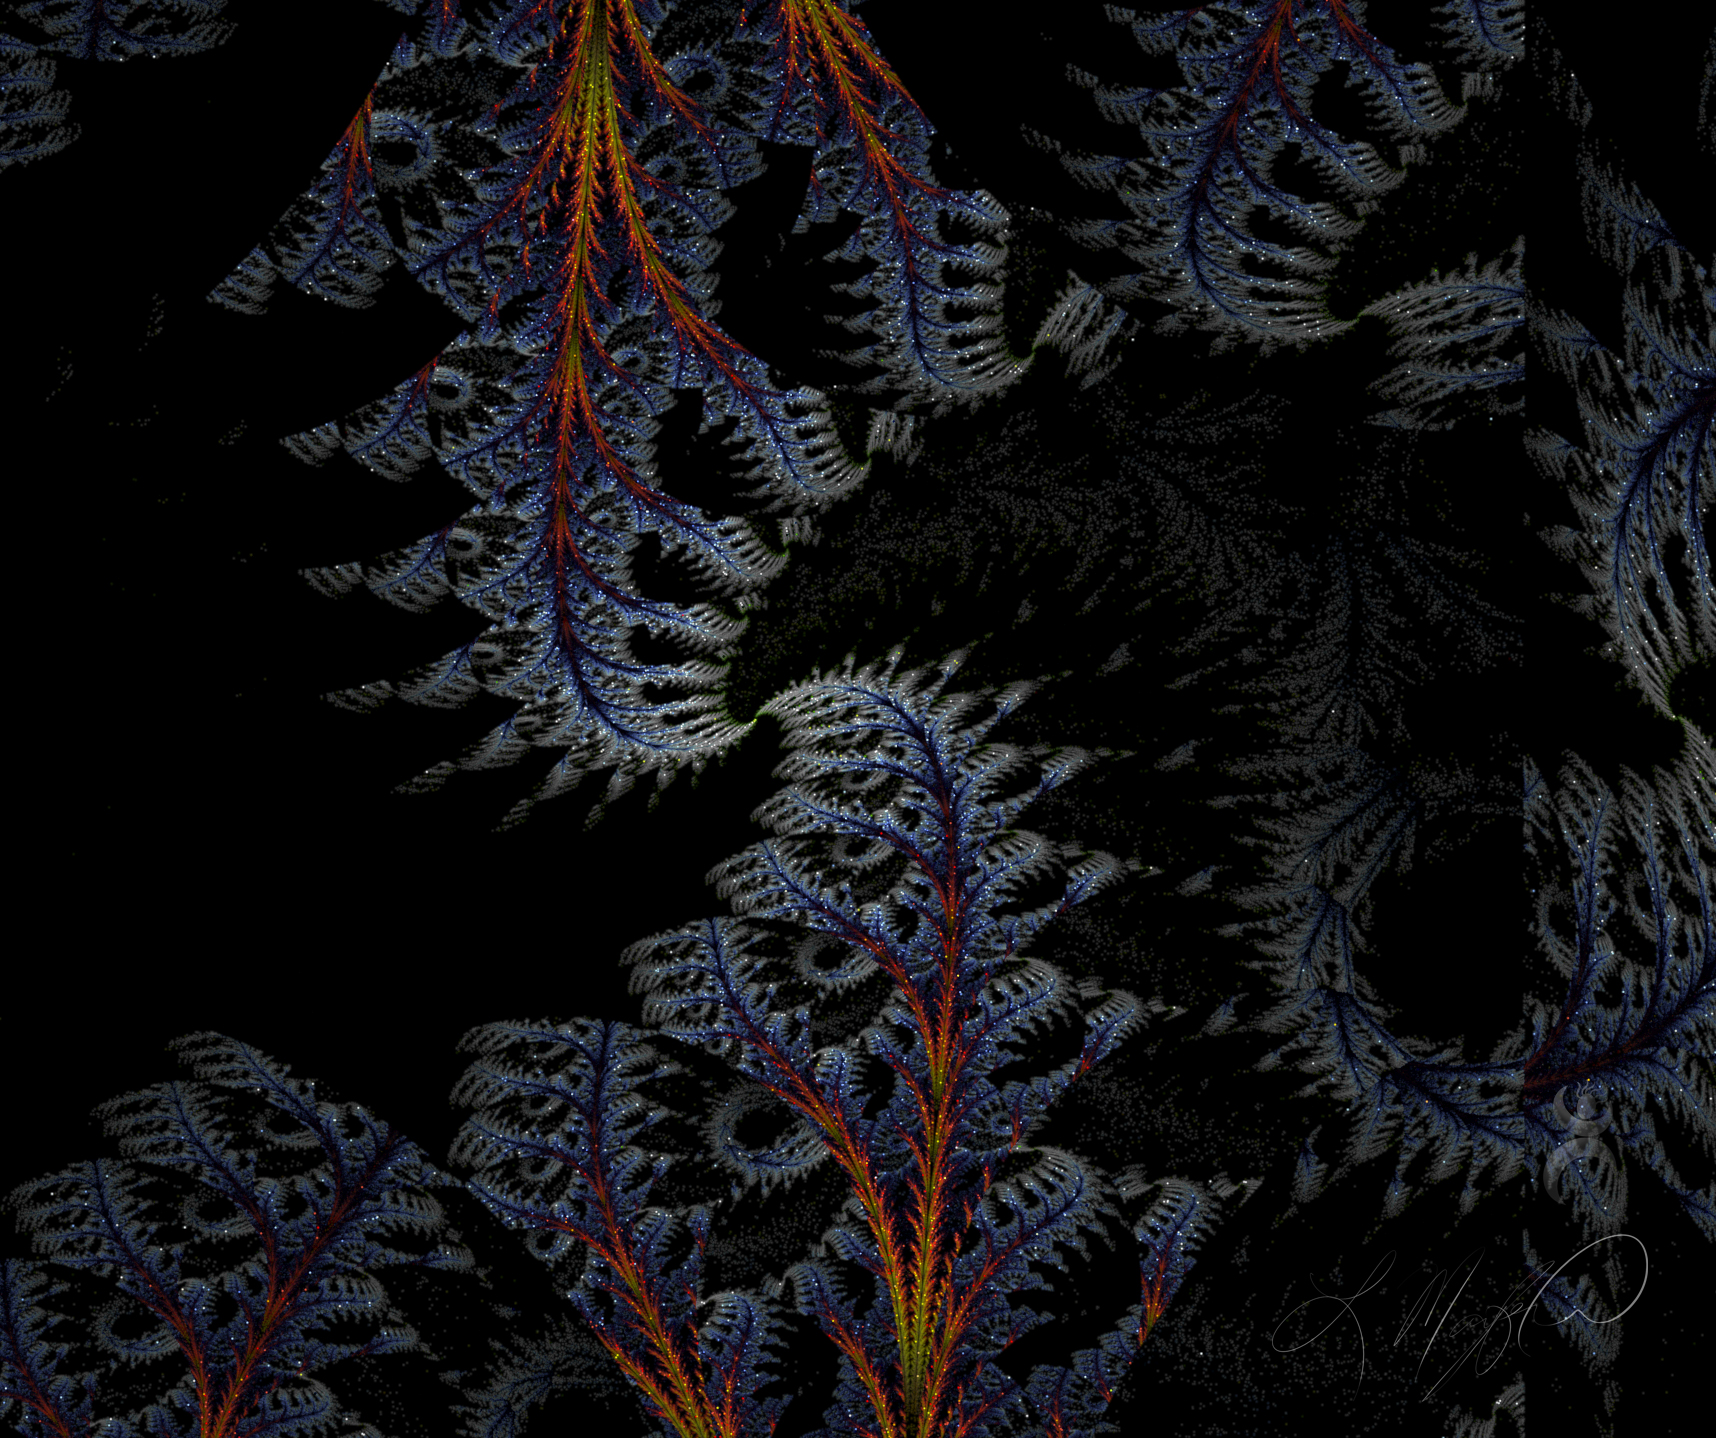 "Pandora Ferns", created with Apophysis 7X